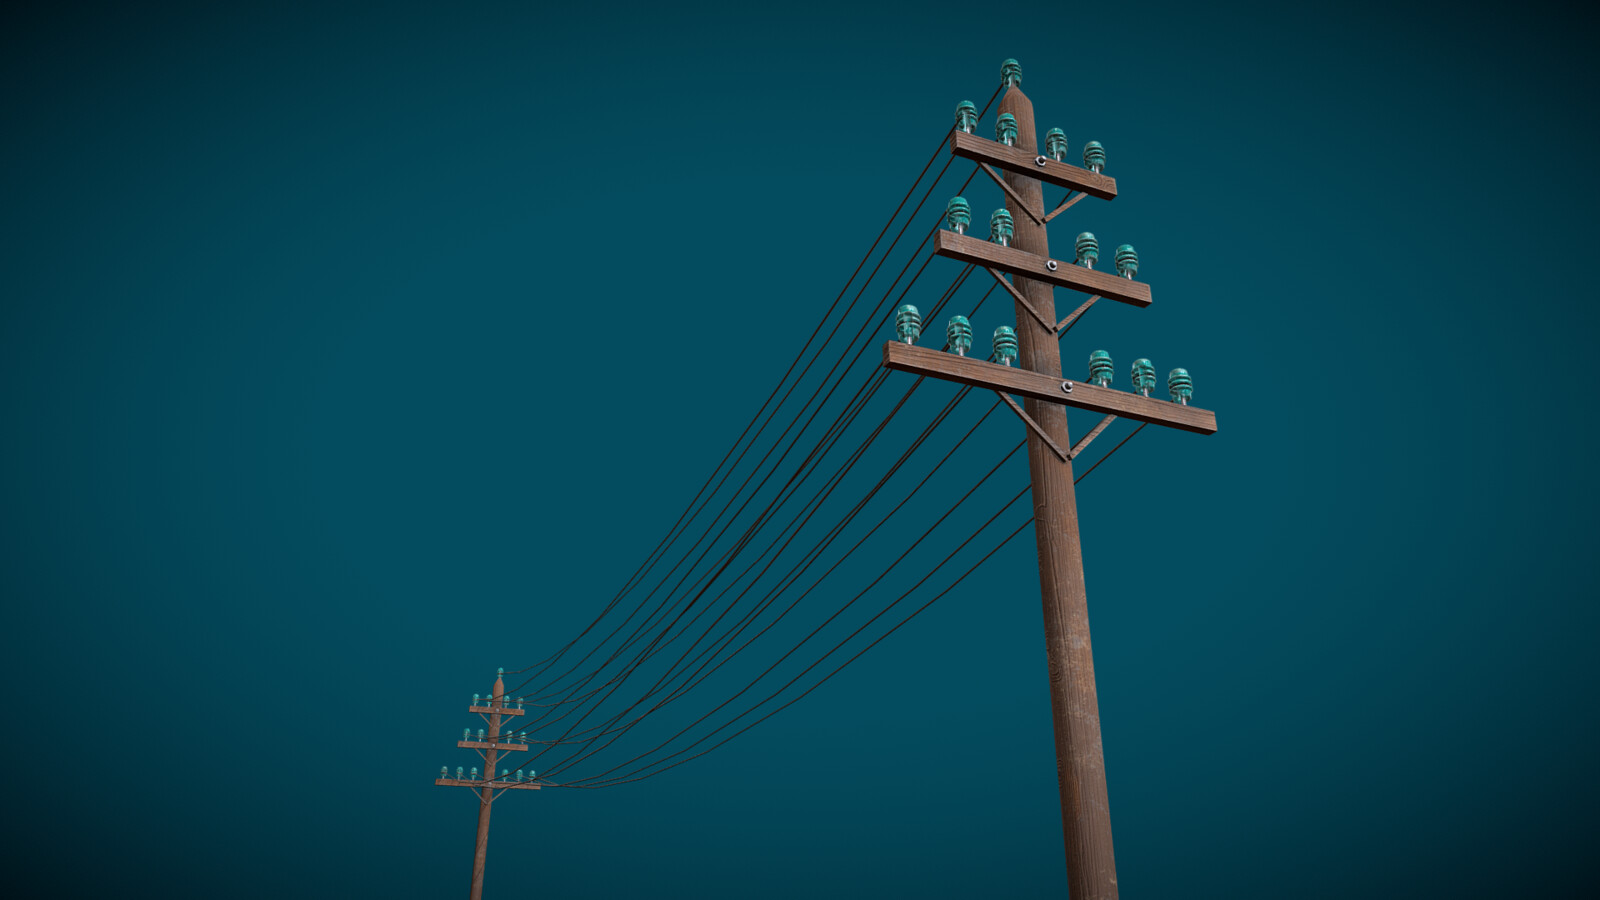 1880s Electric Pole